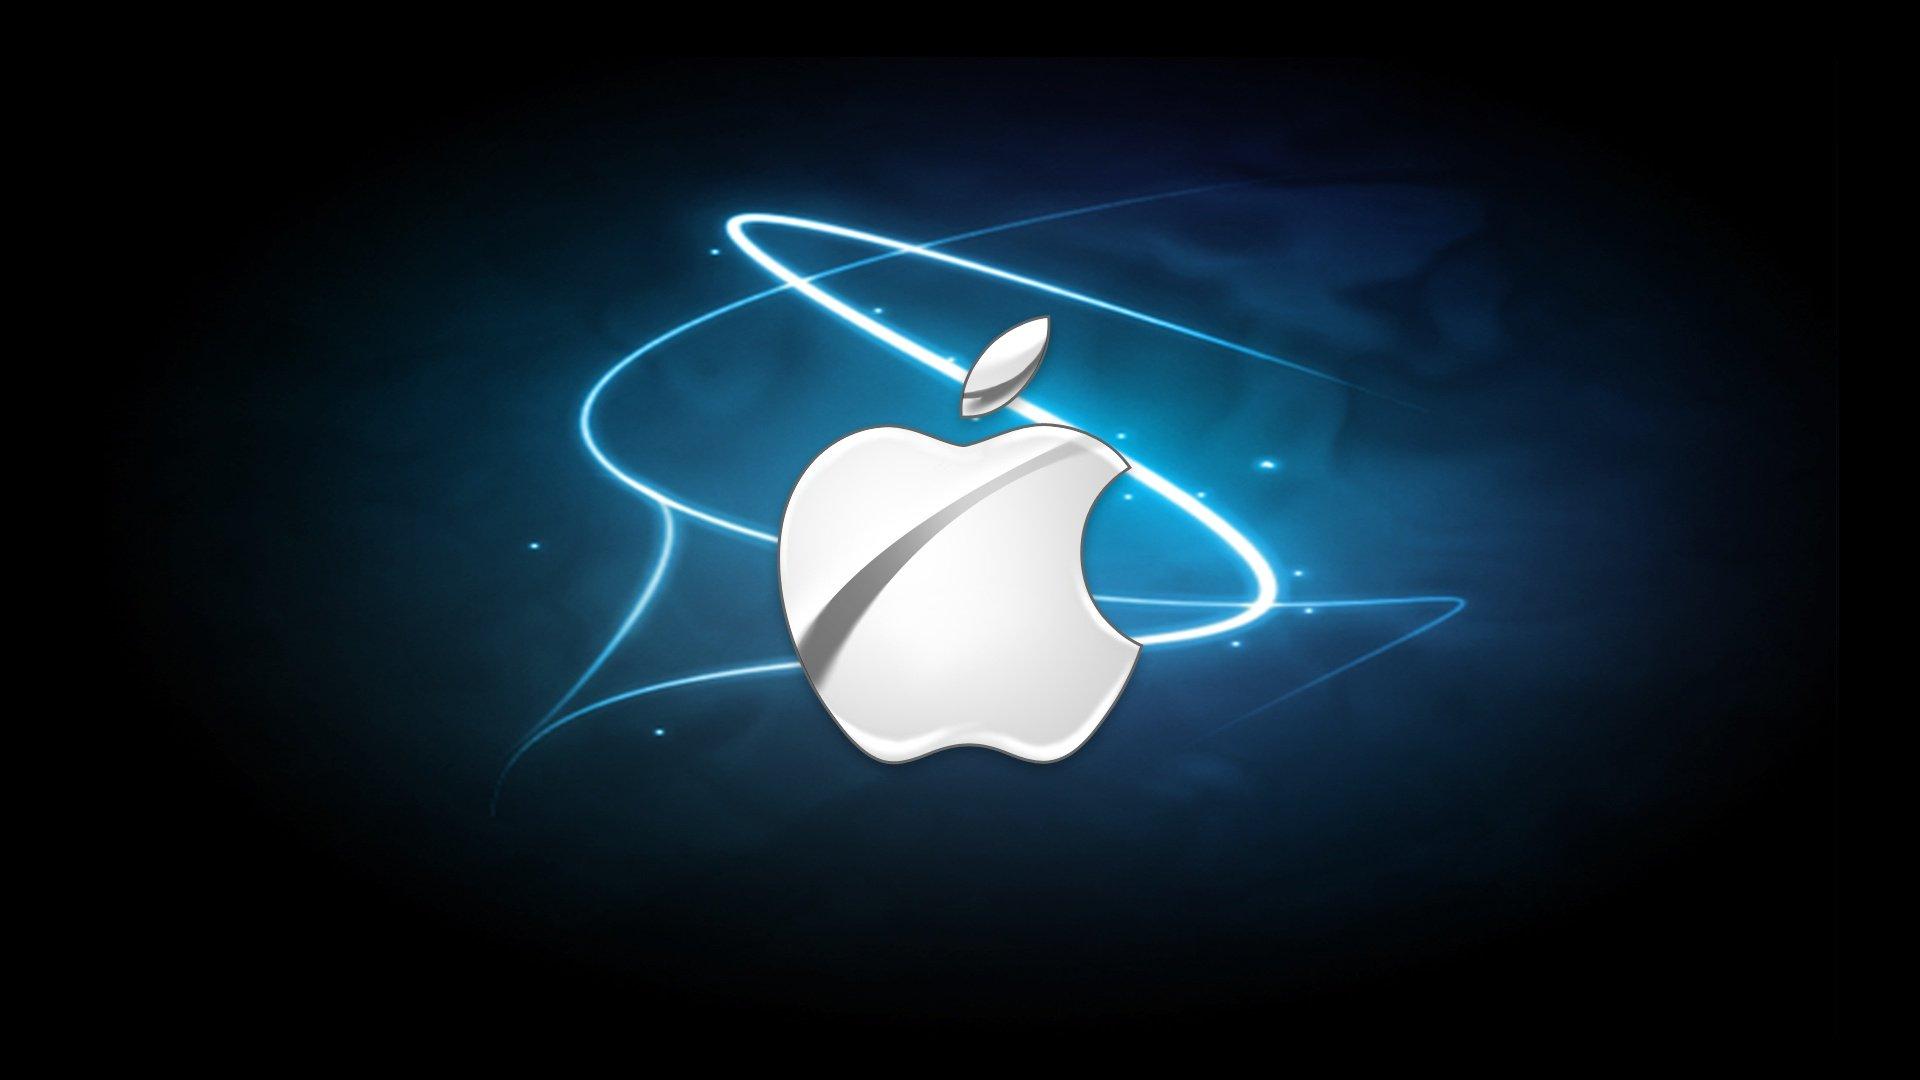 Wallpaper Logo - 50 Inspiring Apple Mac & iPad Wallpapers For Download